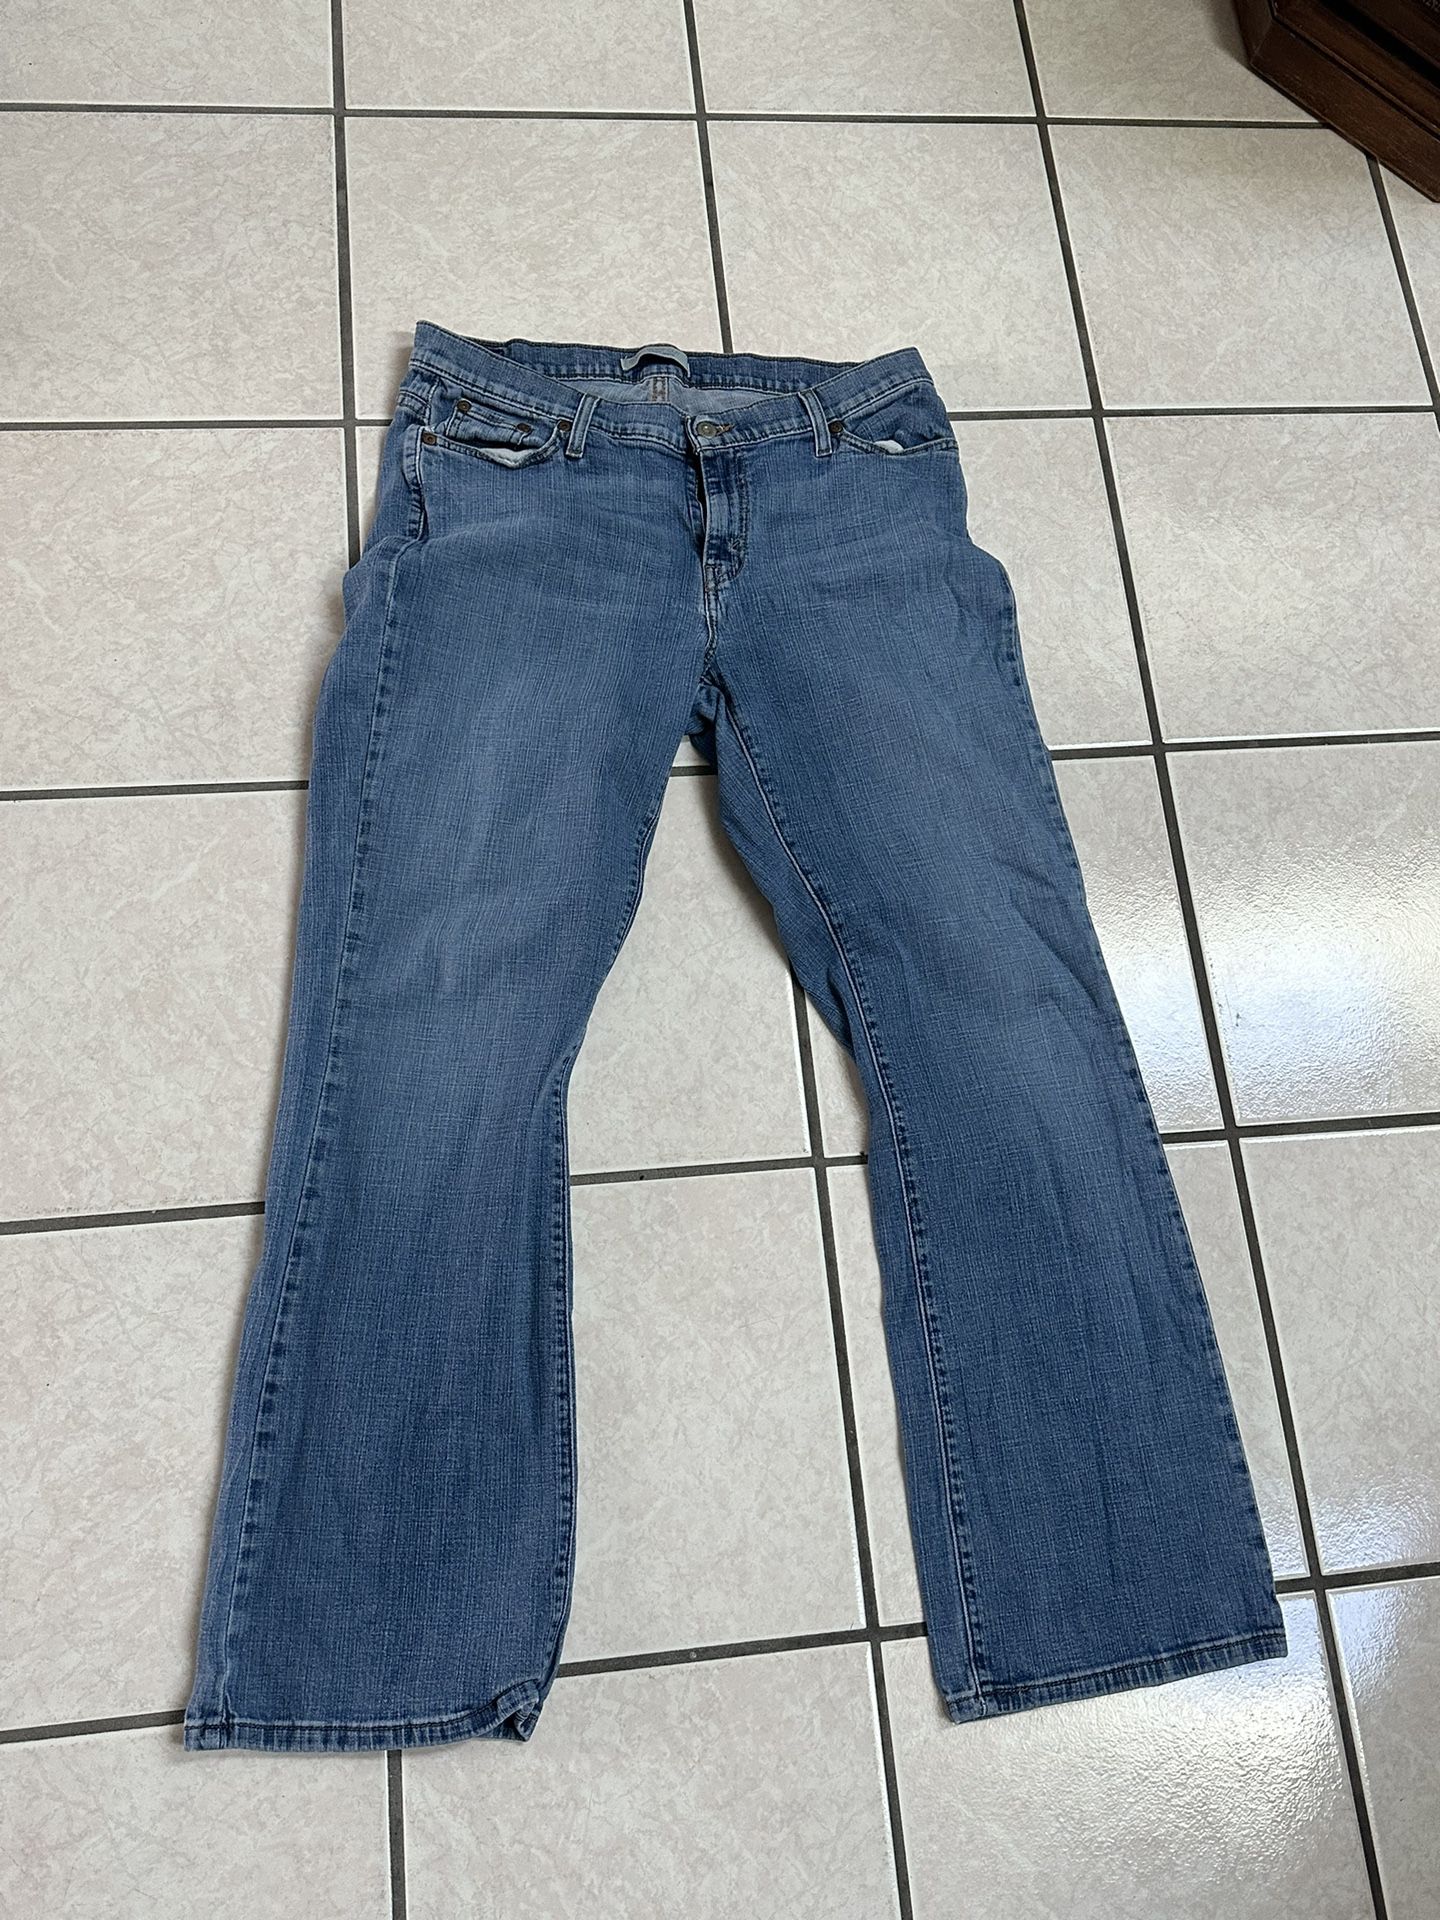 LEVI STRAUSS Women’s jeans